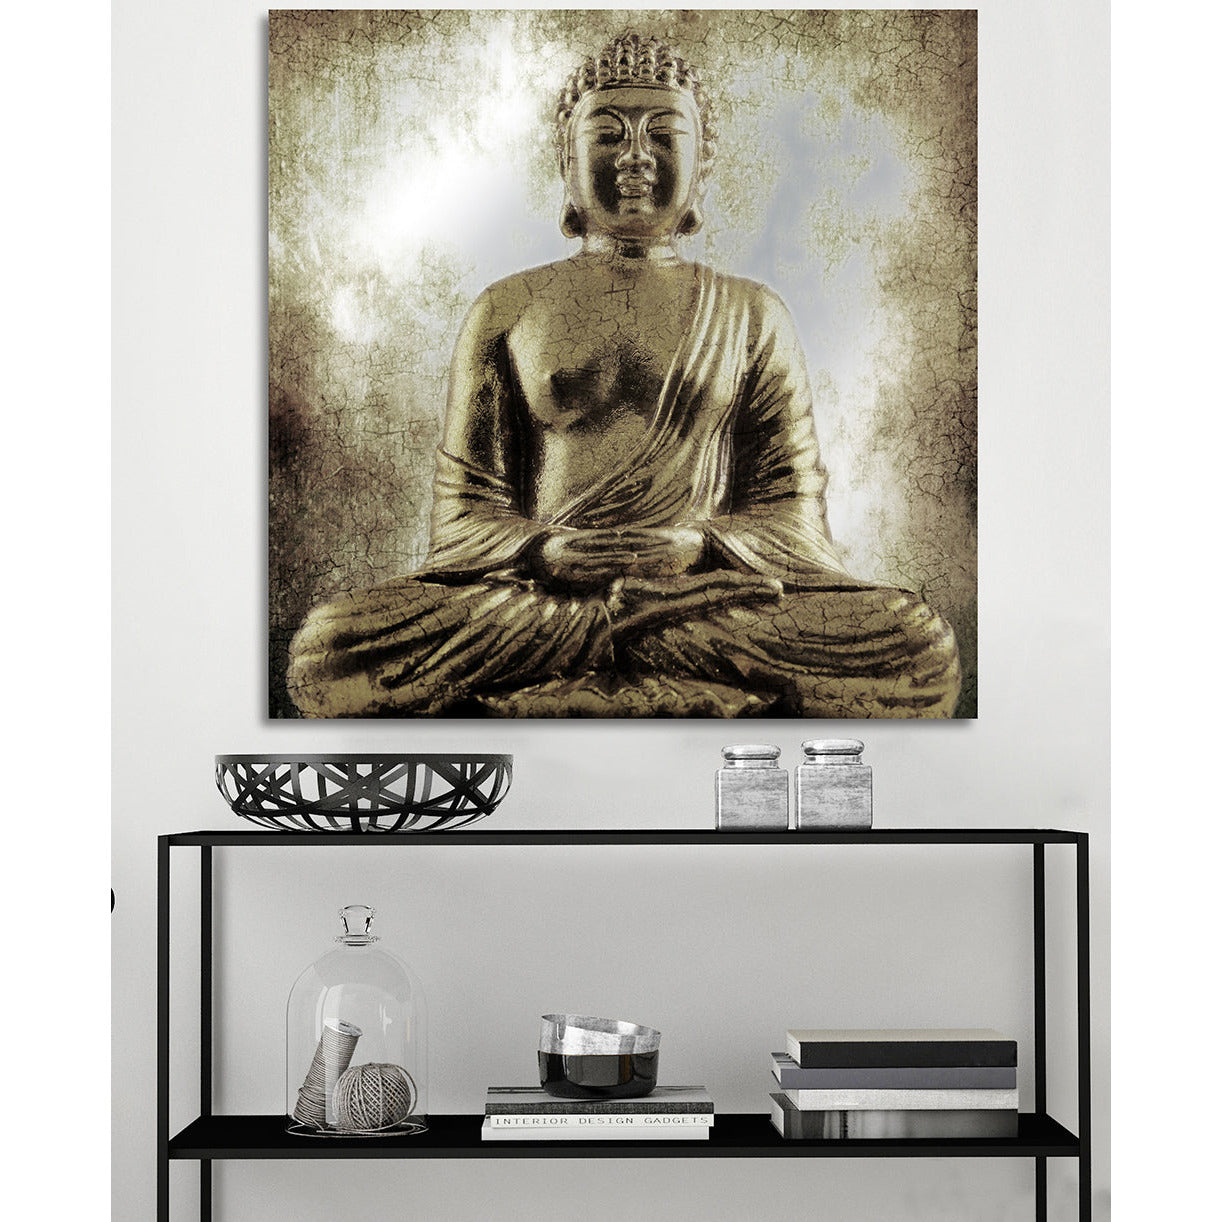 Aluminiumbild - Golden Buddha Wohnbeispiel